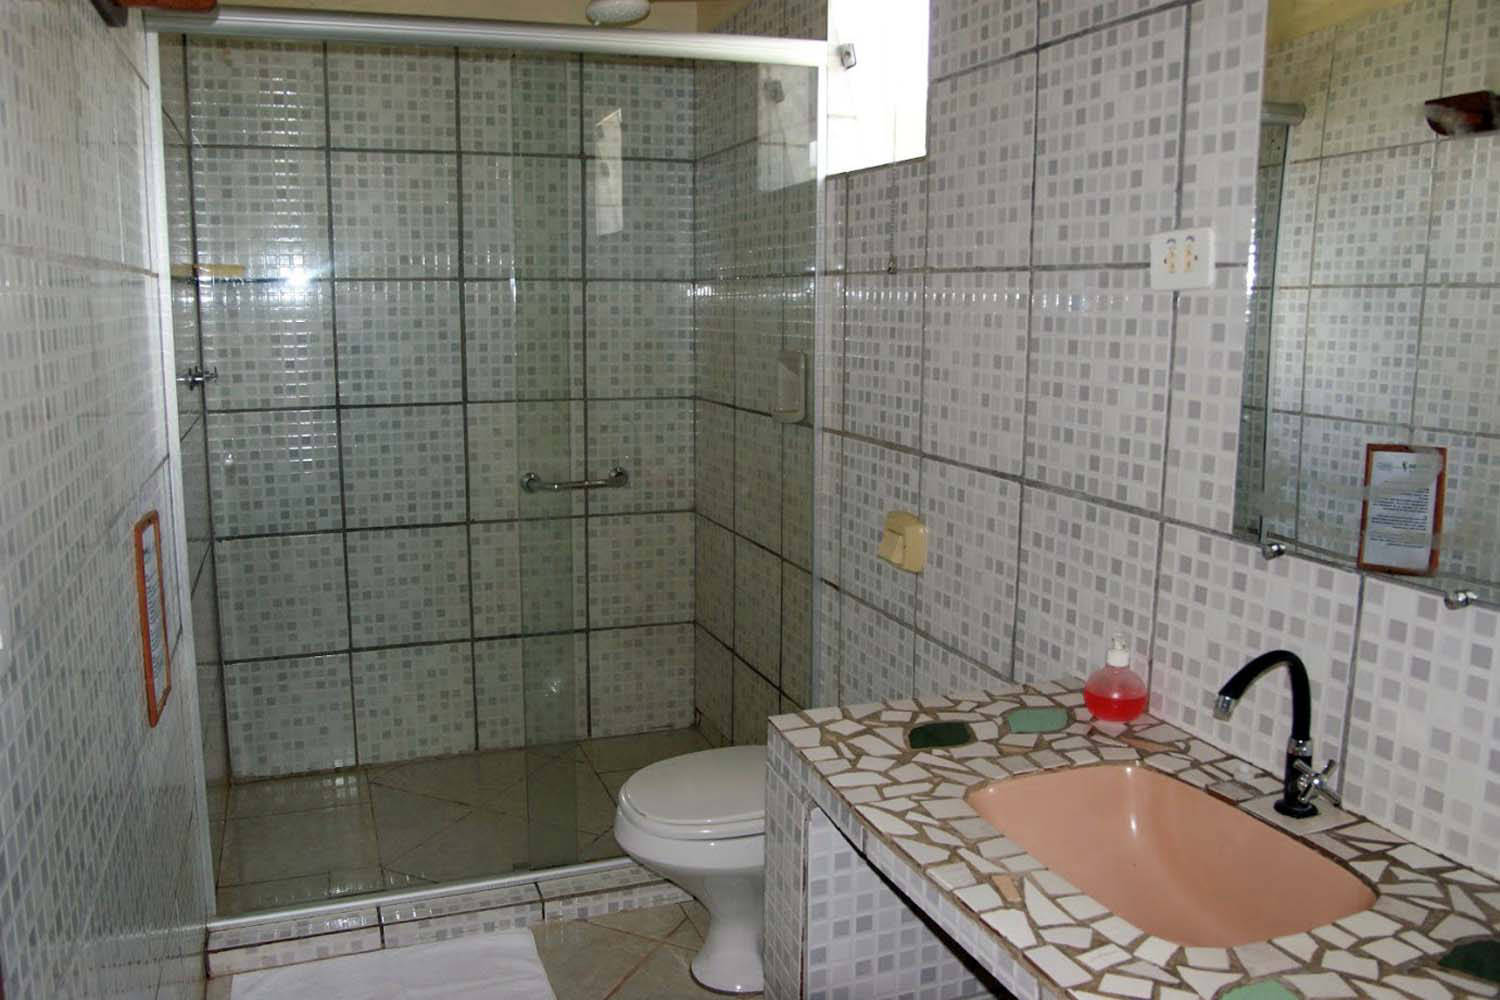 Banheiro, vaso sanitário, chuveiros